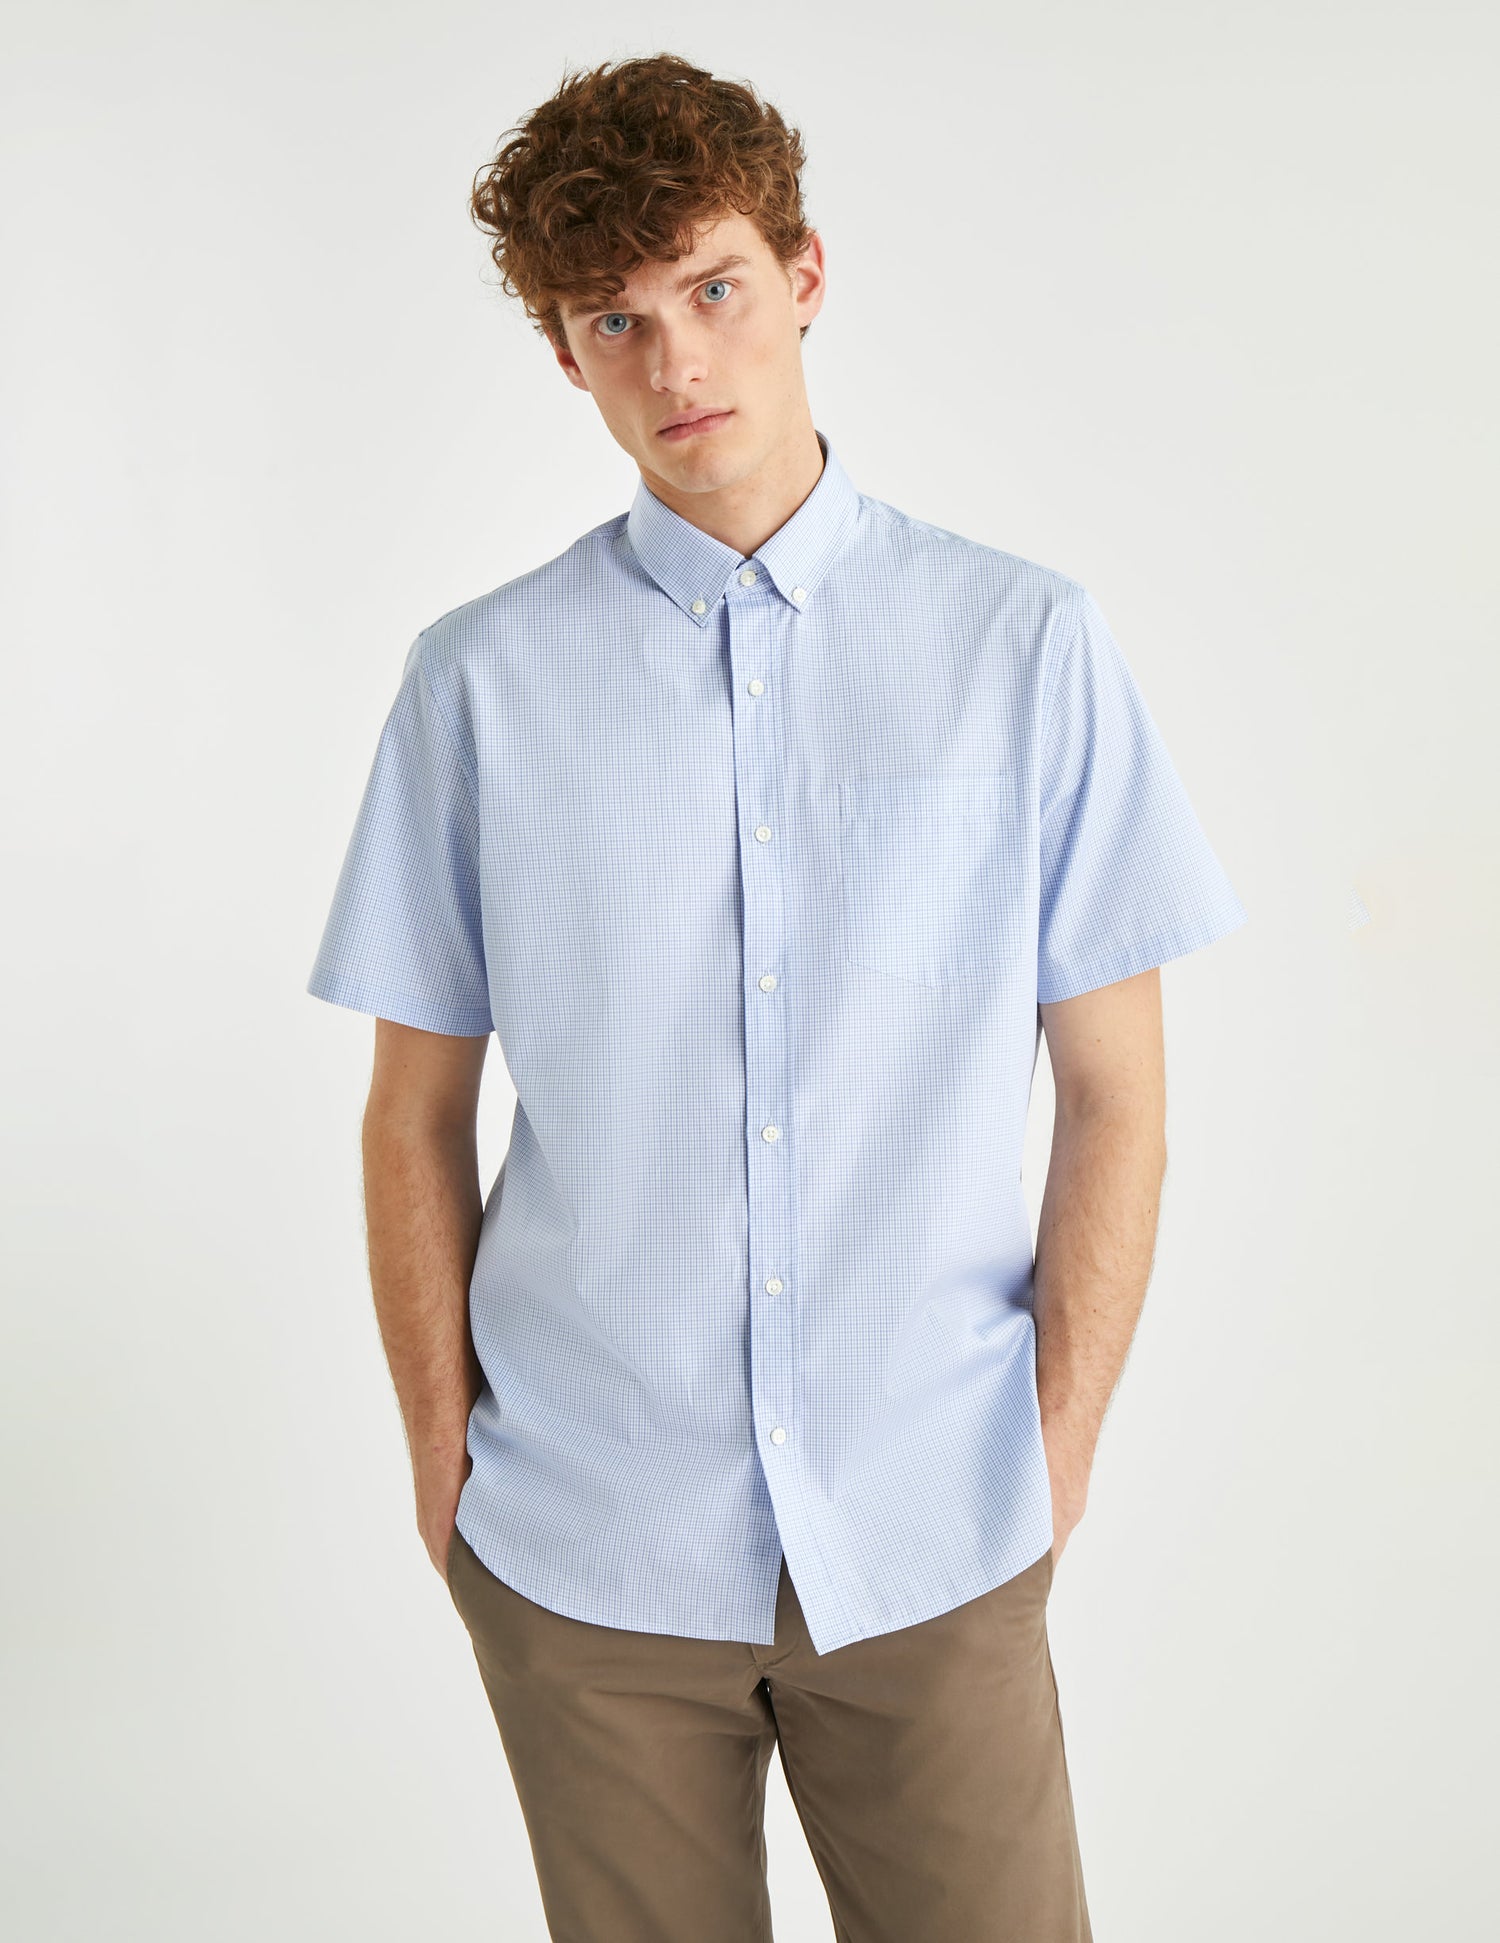 Classic short sleeve blue checked shirt - Poplin - American Collar#3